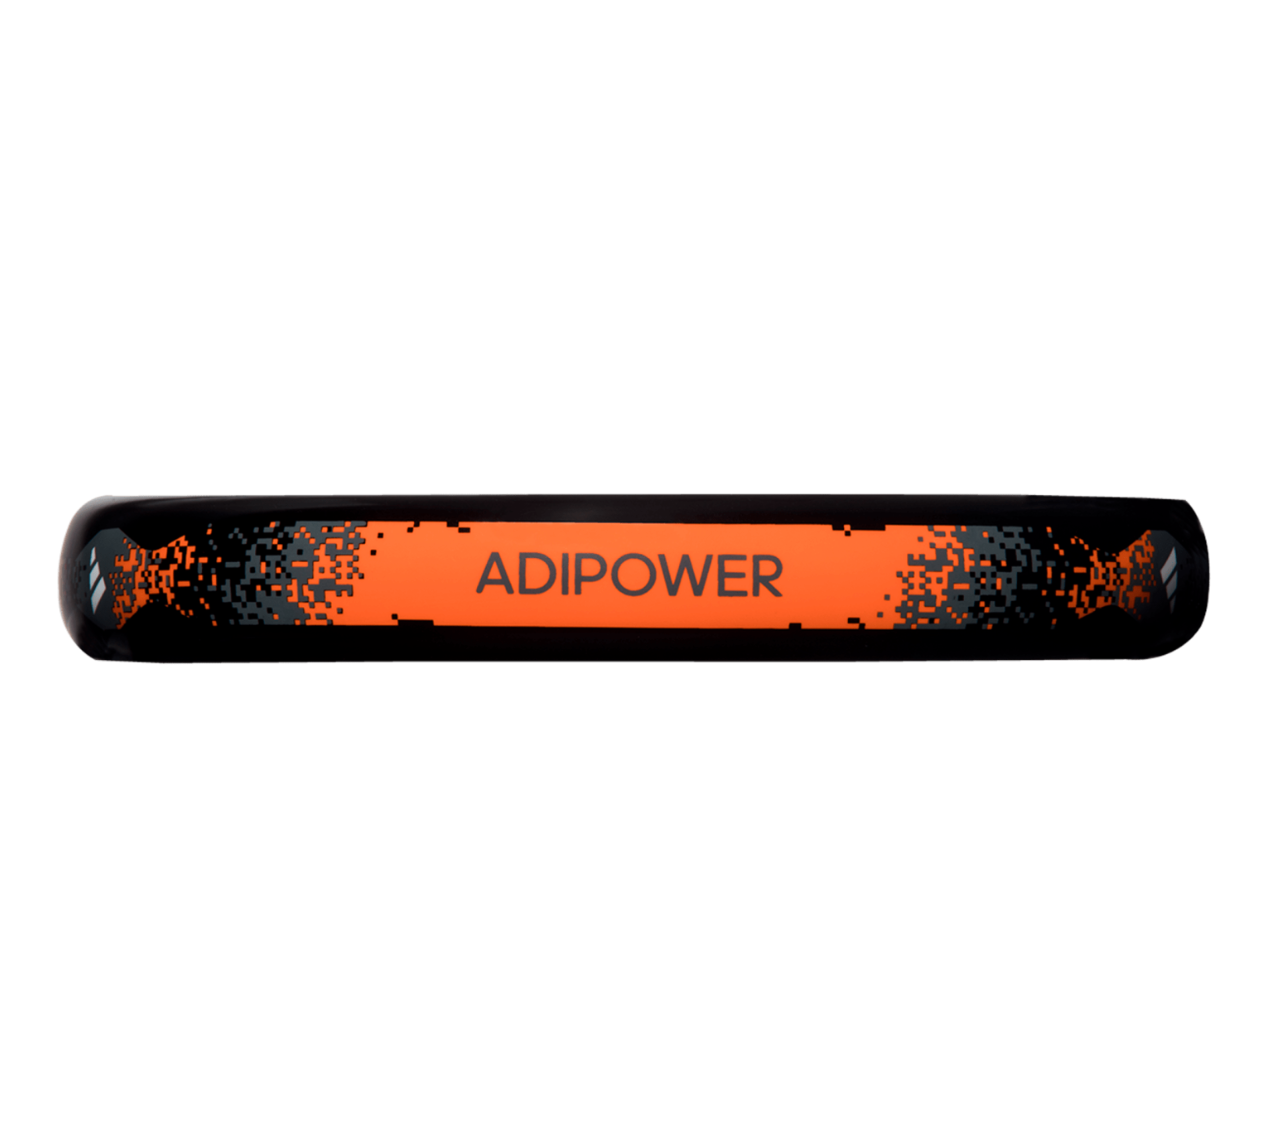 Adidas Adipower Junior 3.2 Racket - Padel Reference